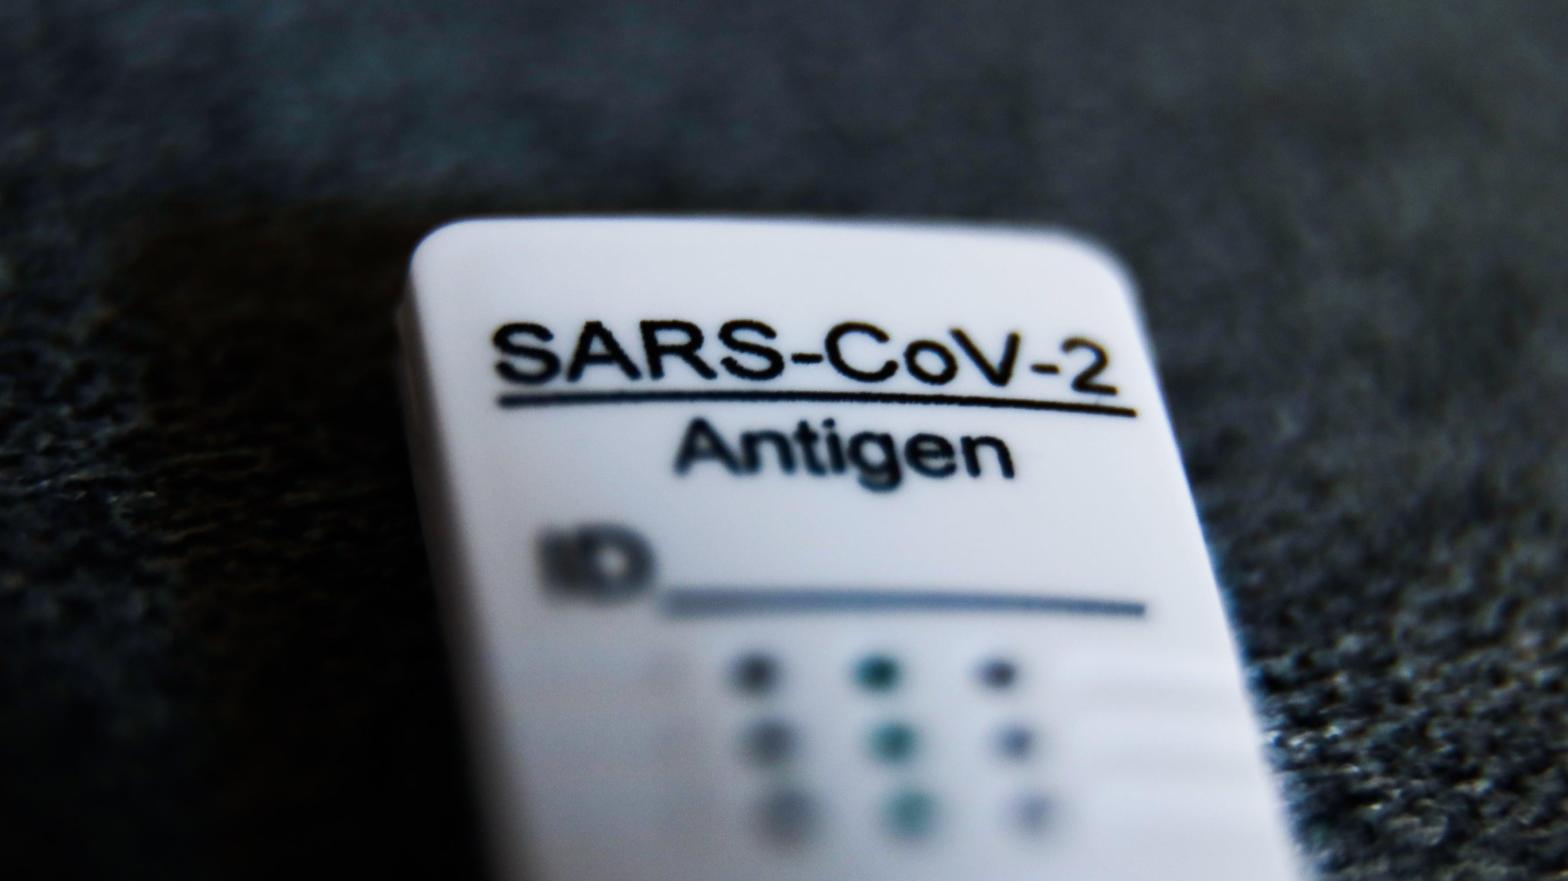 A SARS-CoV-2 antigen test. (Photo: Jakub Porzycki/NurPhoto, Getty Images)